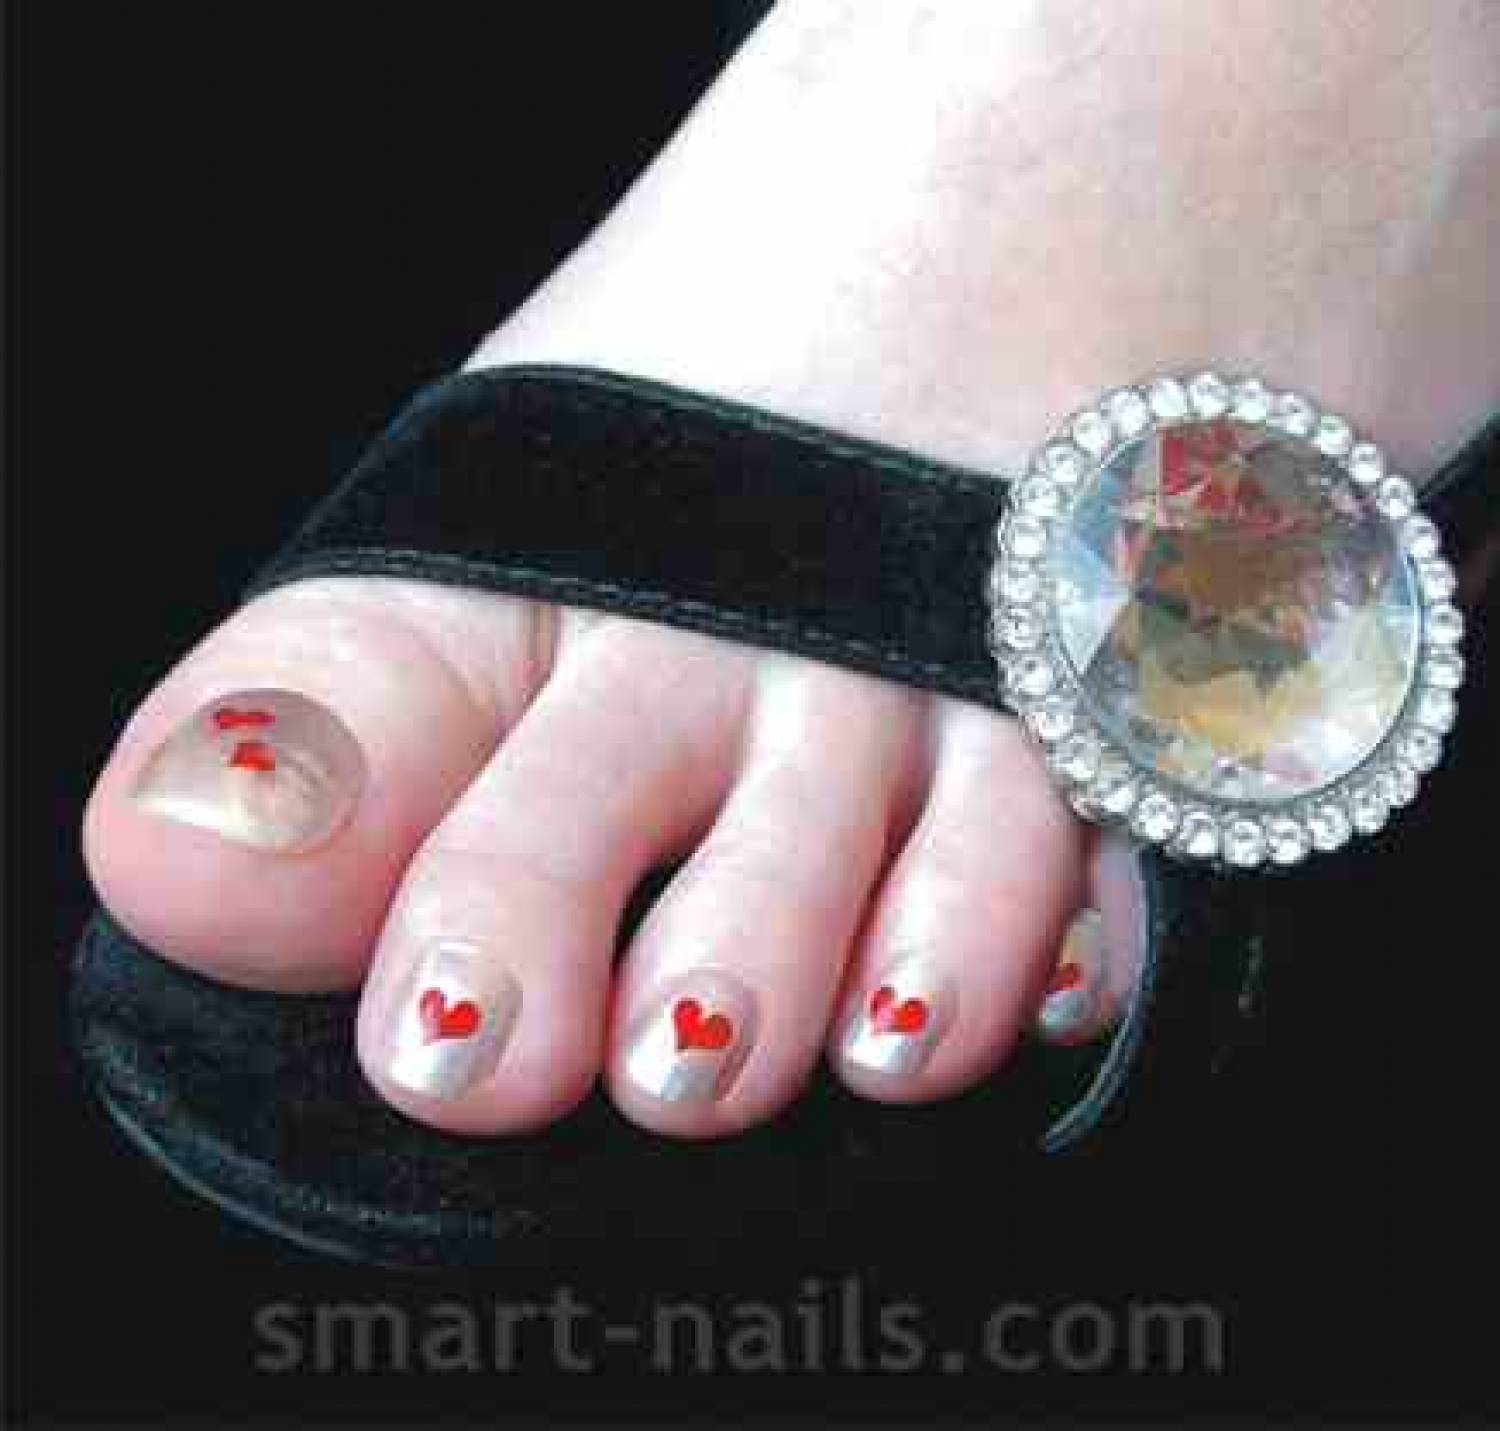 smART nails N016 - smART nails Benelux distributeur van Nederland ...